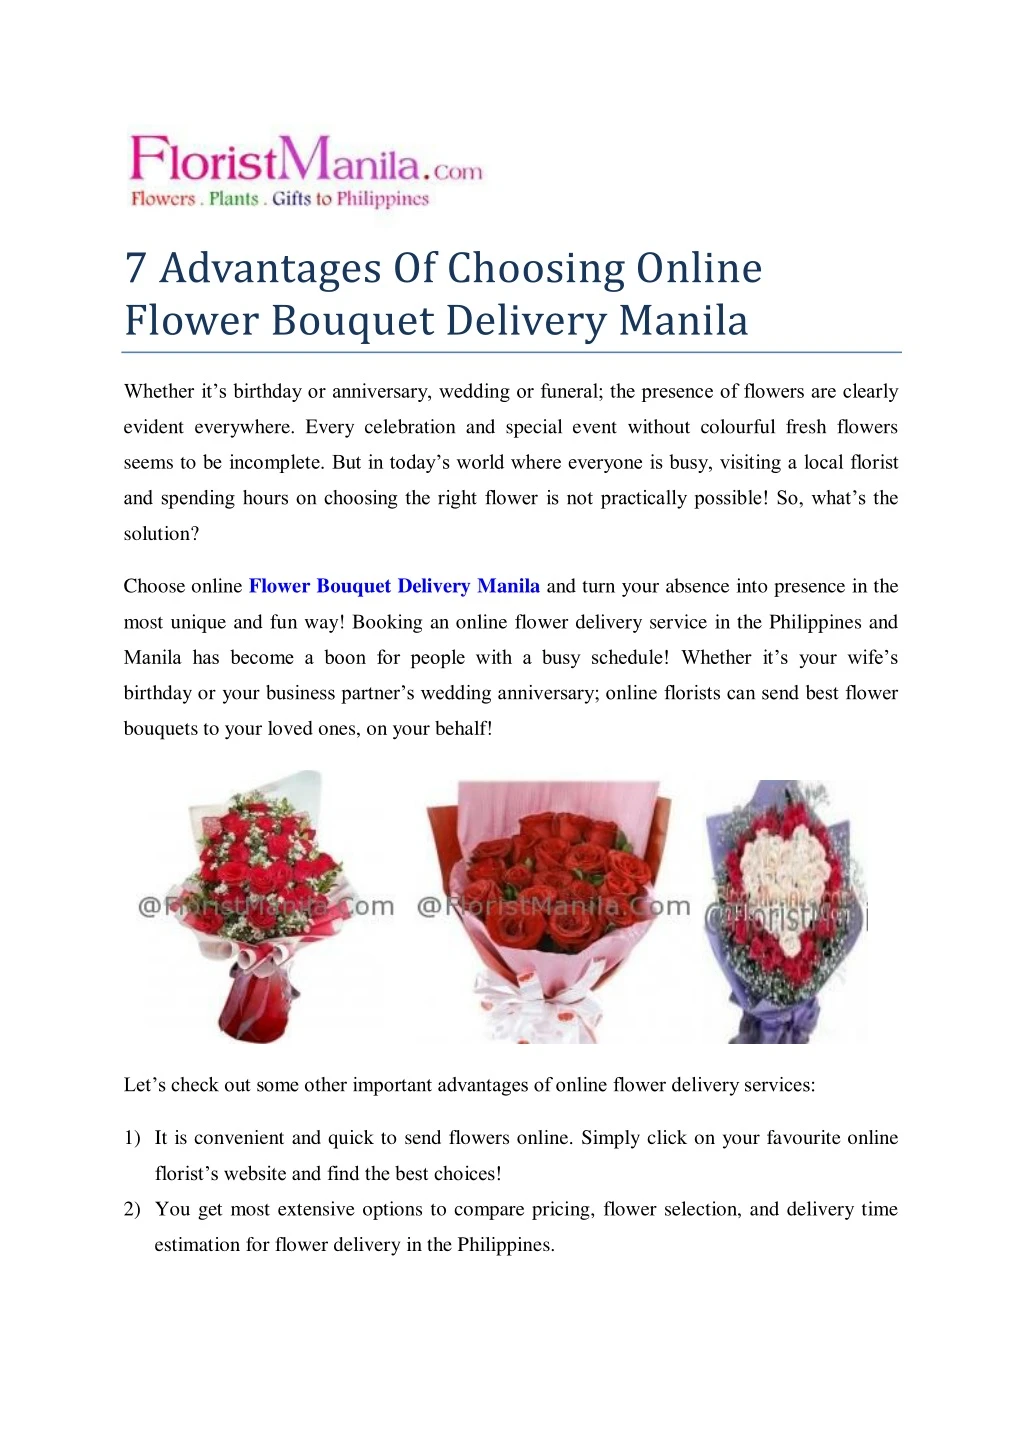 7 advantages of choosing online flower bouquet